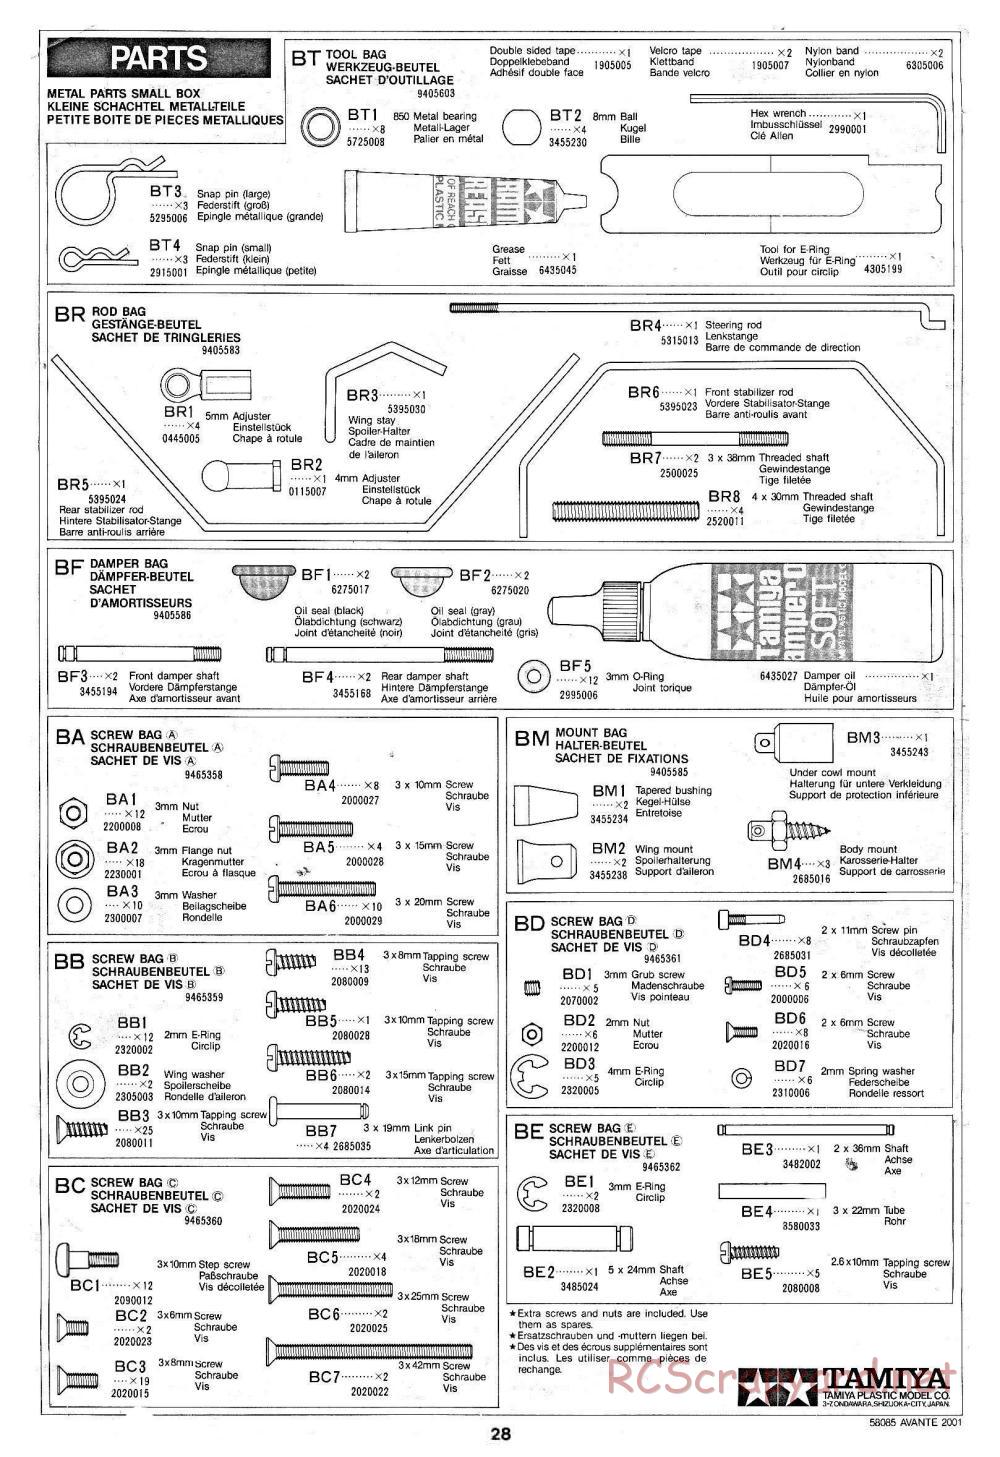 Tamiya - Avante 2001 - 58085 - Manual - Page 28